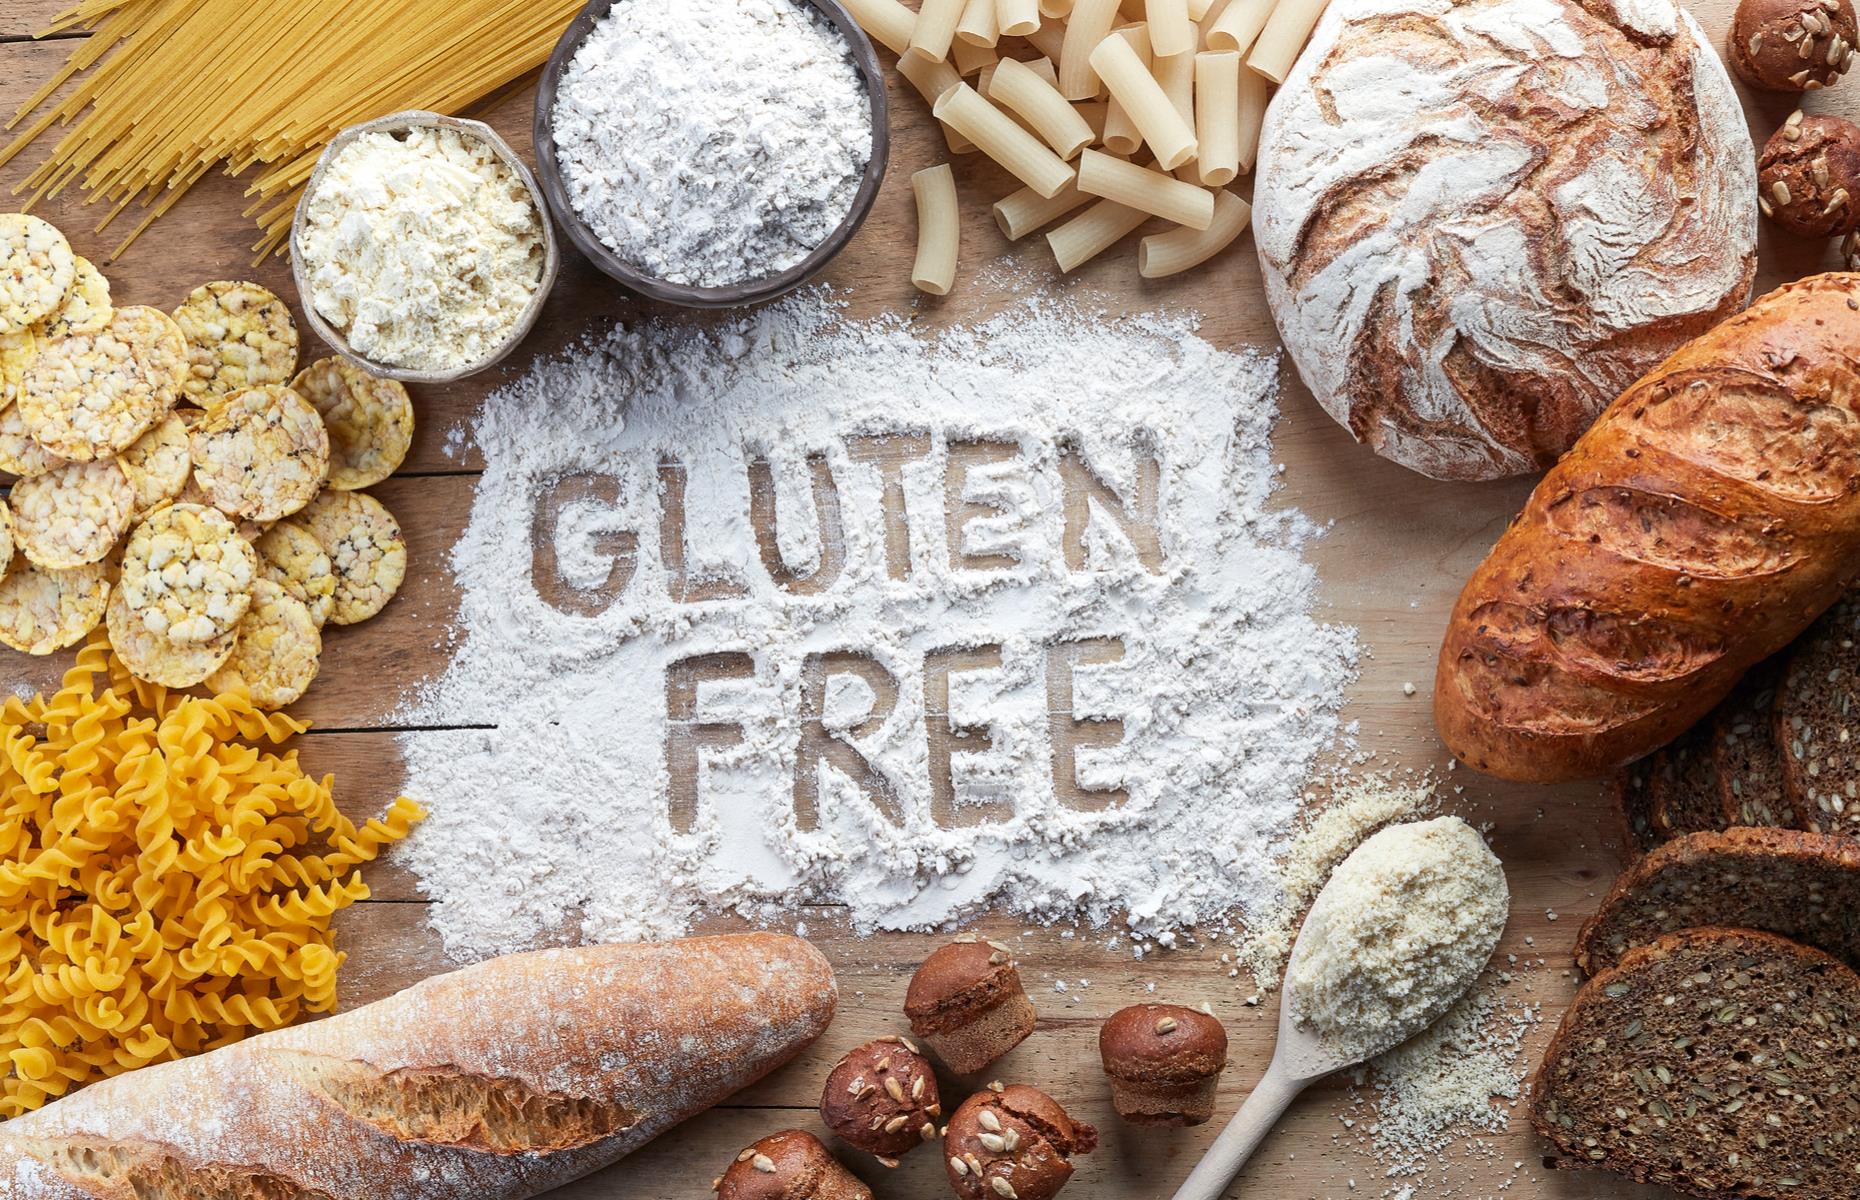 The gluten-free rip off